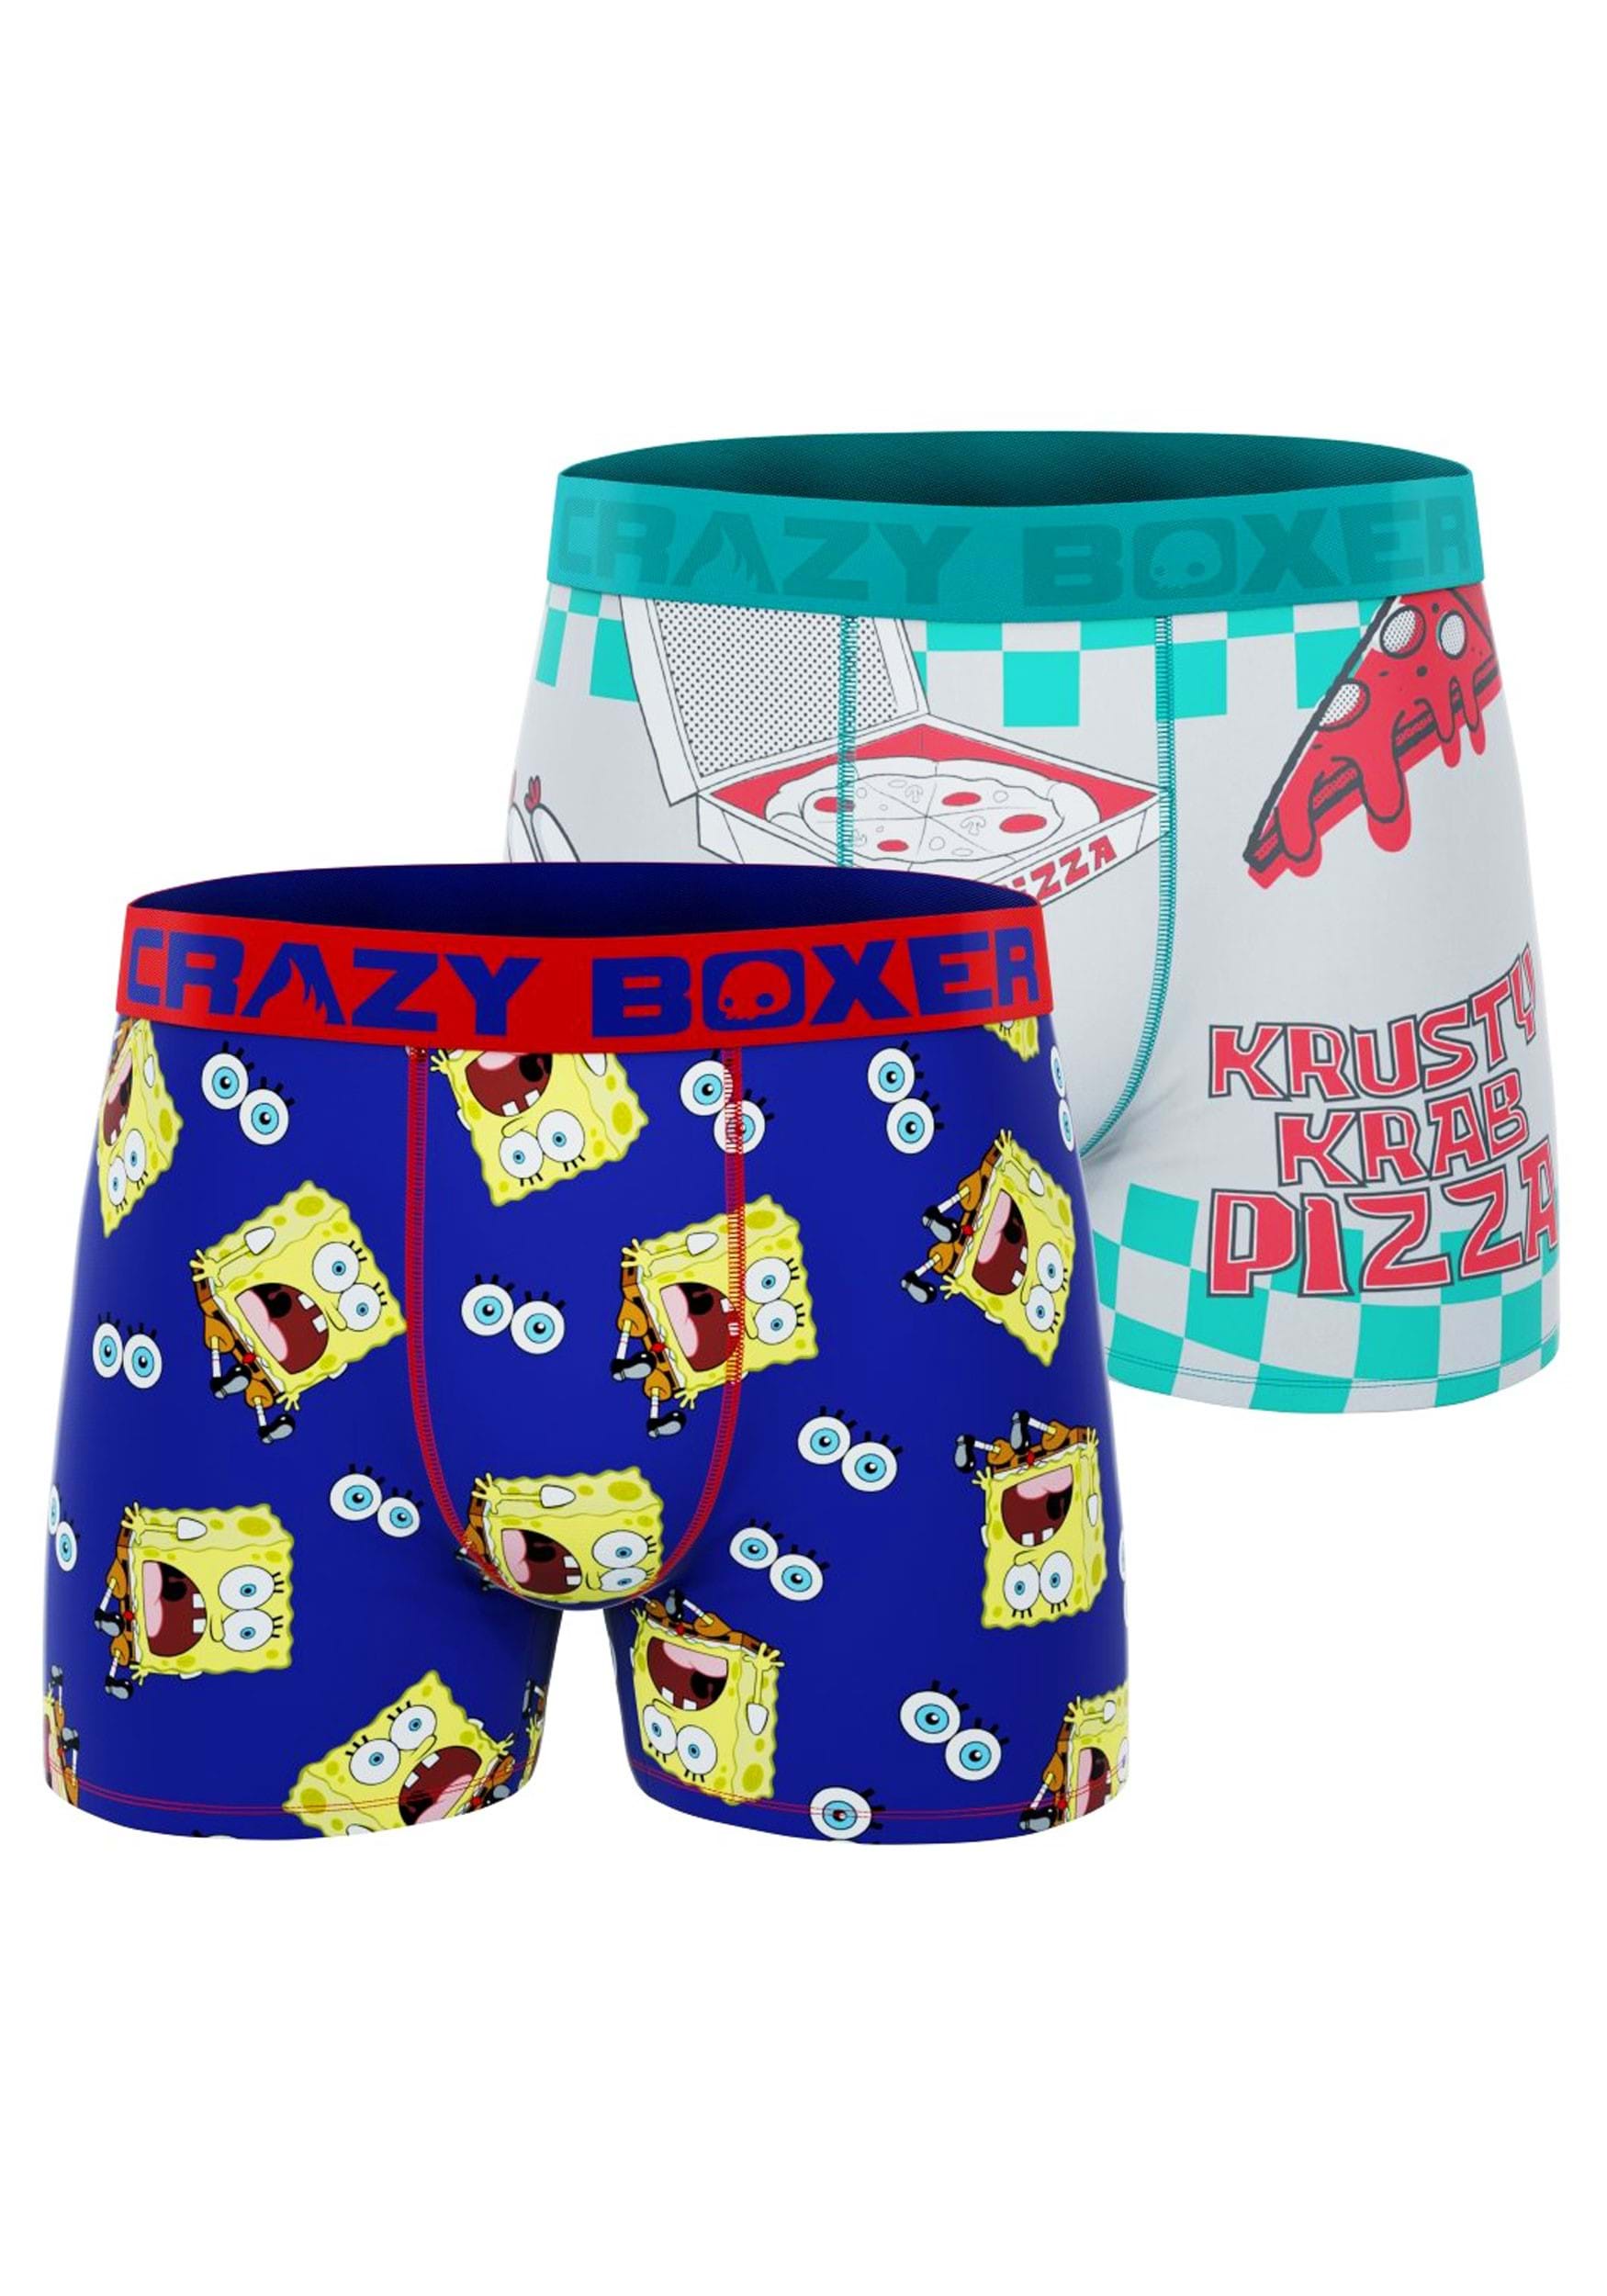 https://images.fun.com/products/79257/1-1/spongebob-2-pack-krusty-krab-pizza-boxer-briefs-for-men.jpg